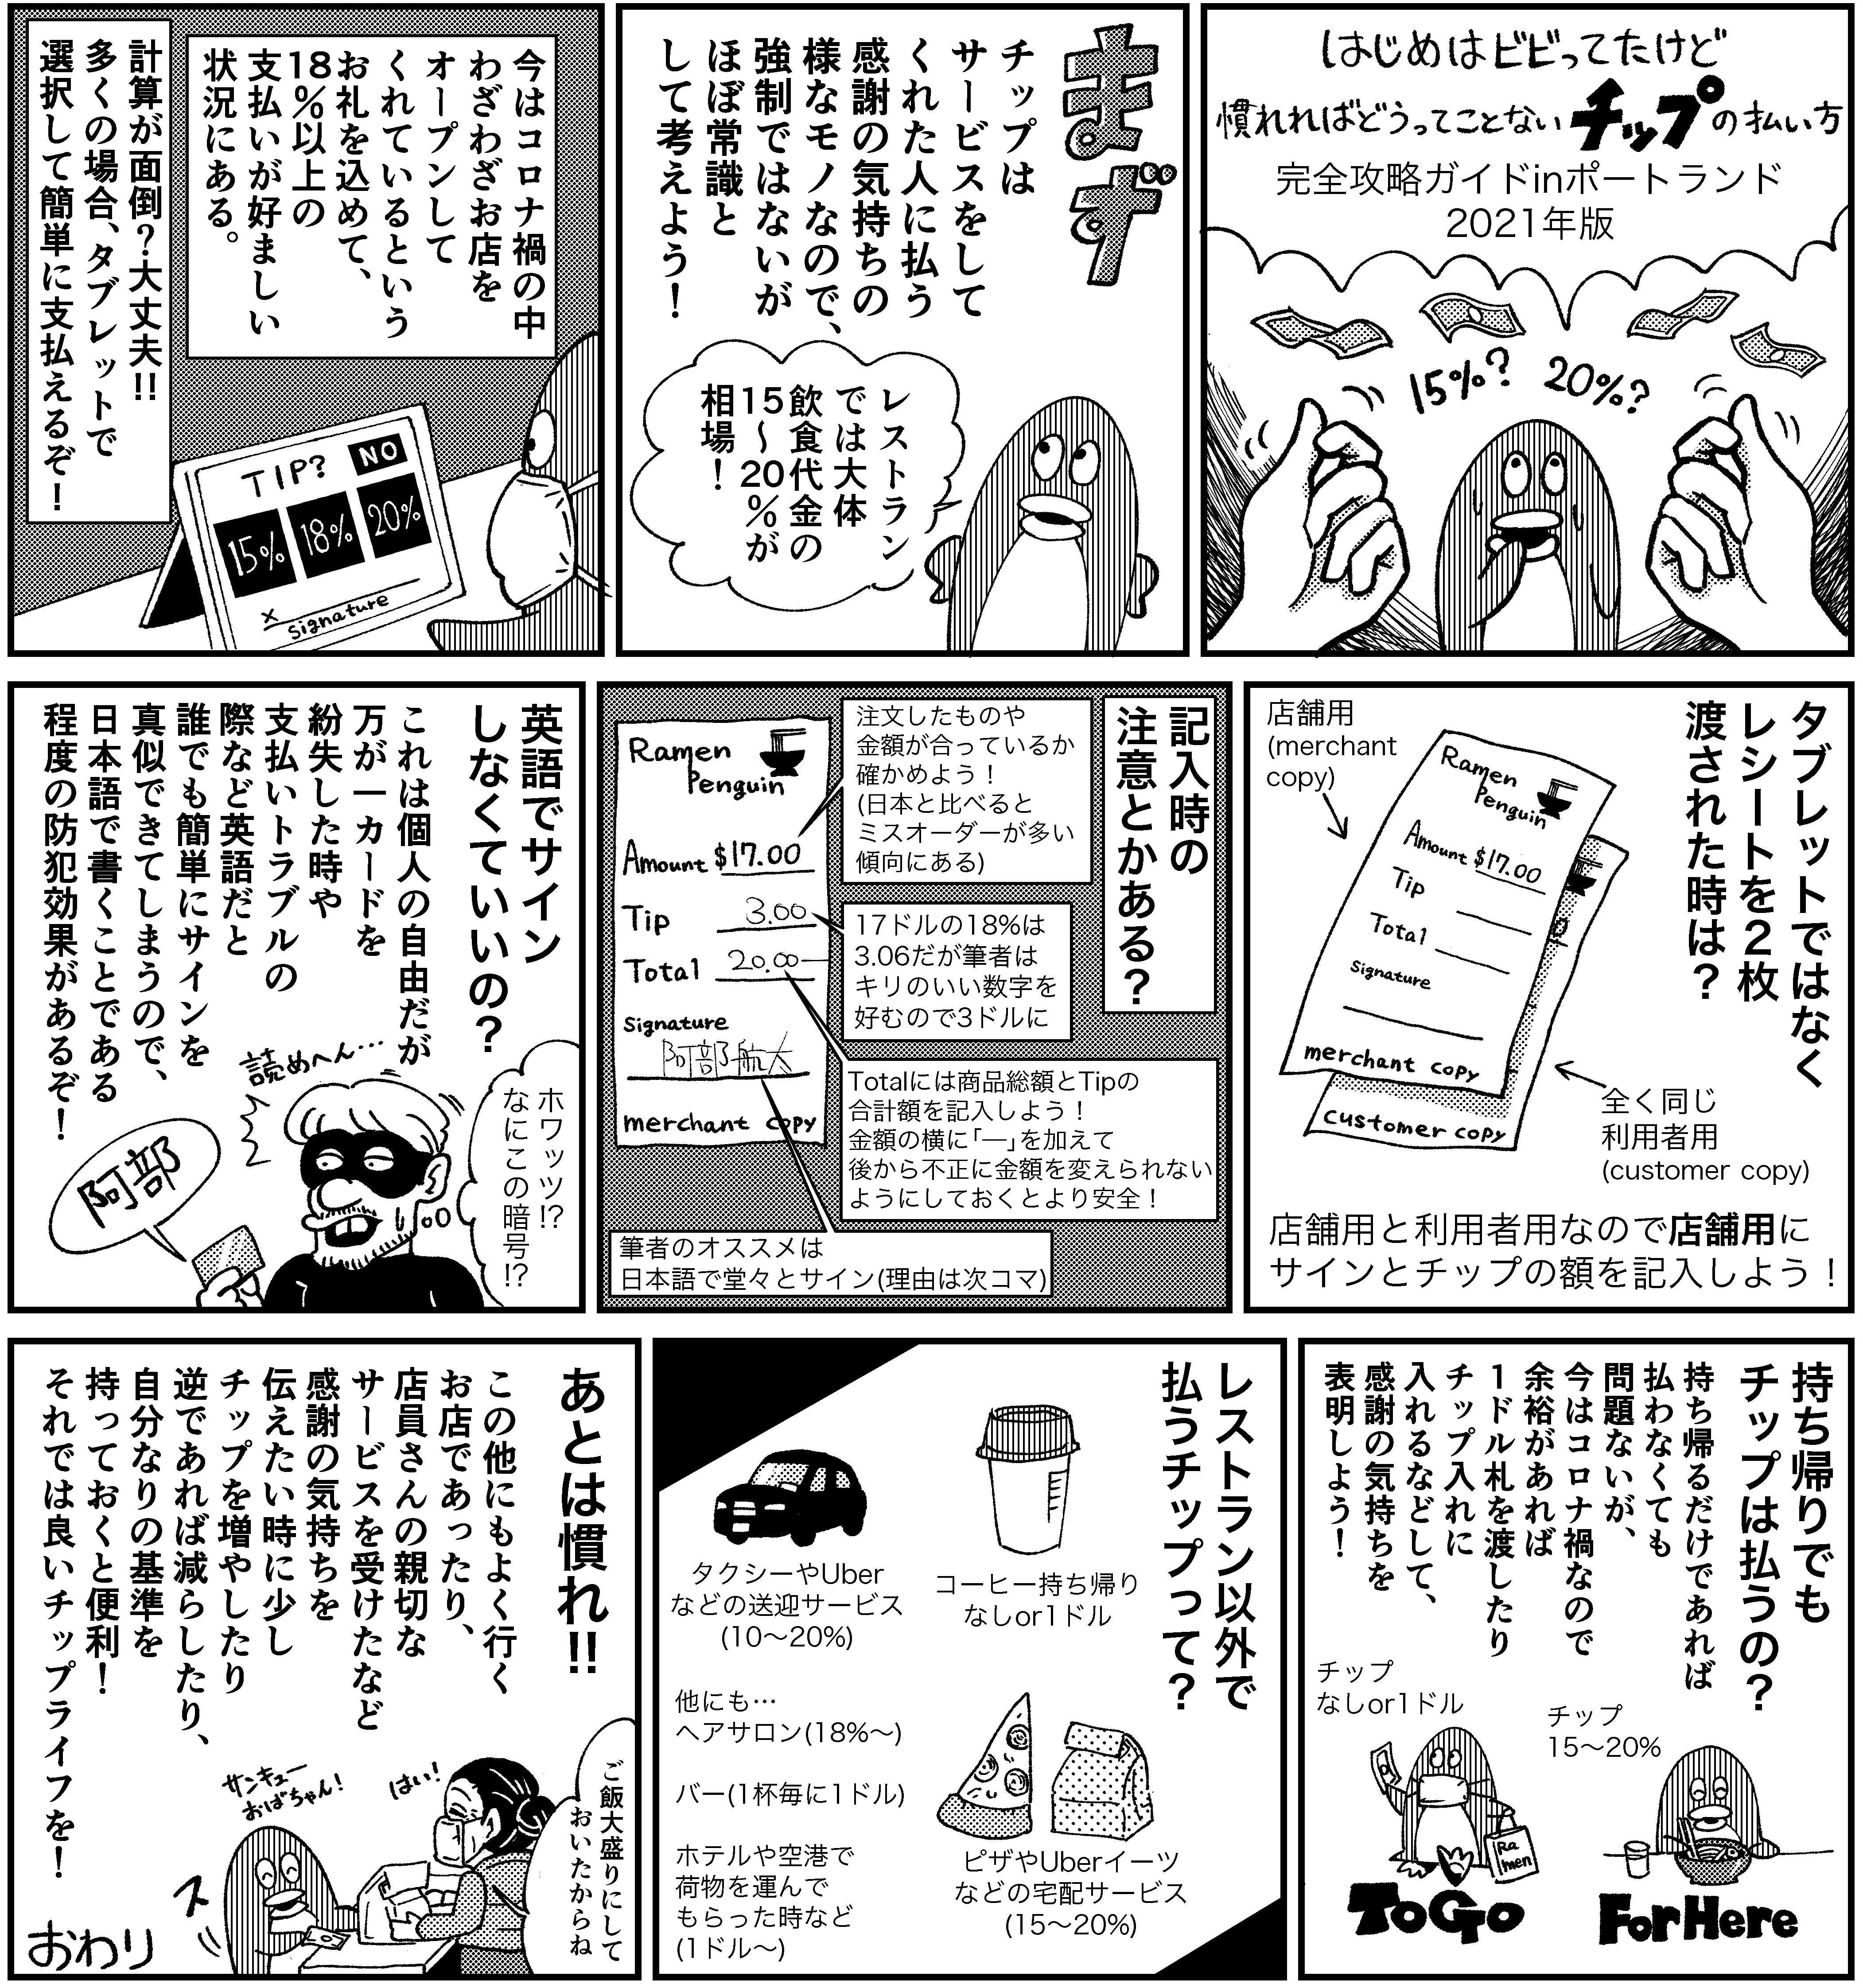 rj2202_manga.png